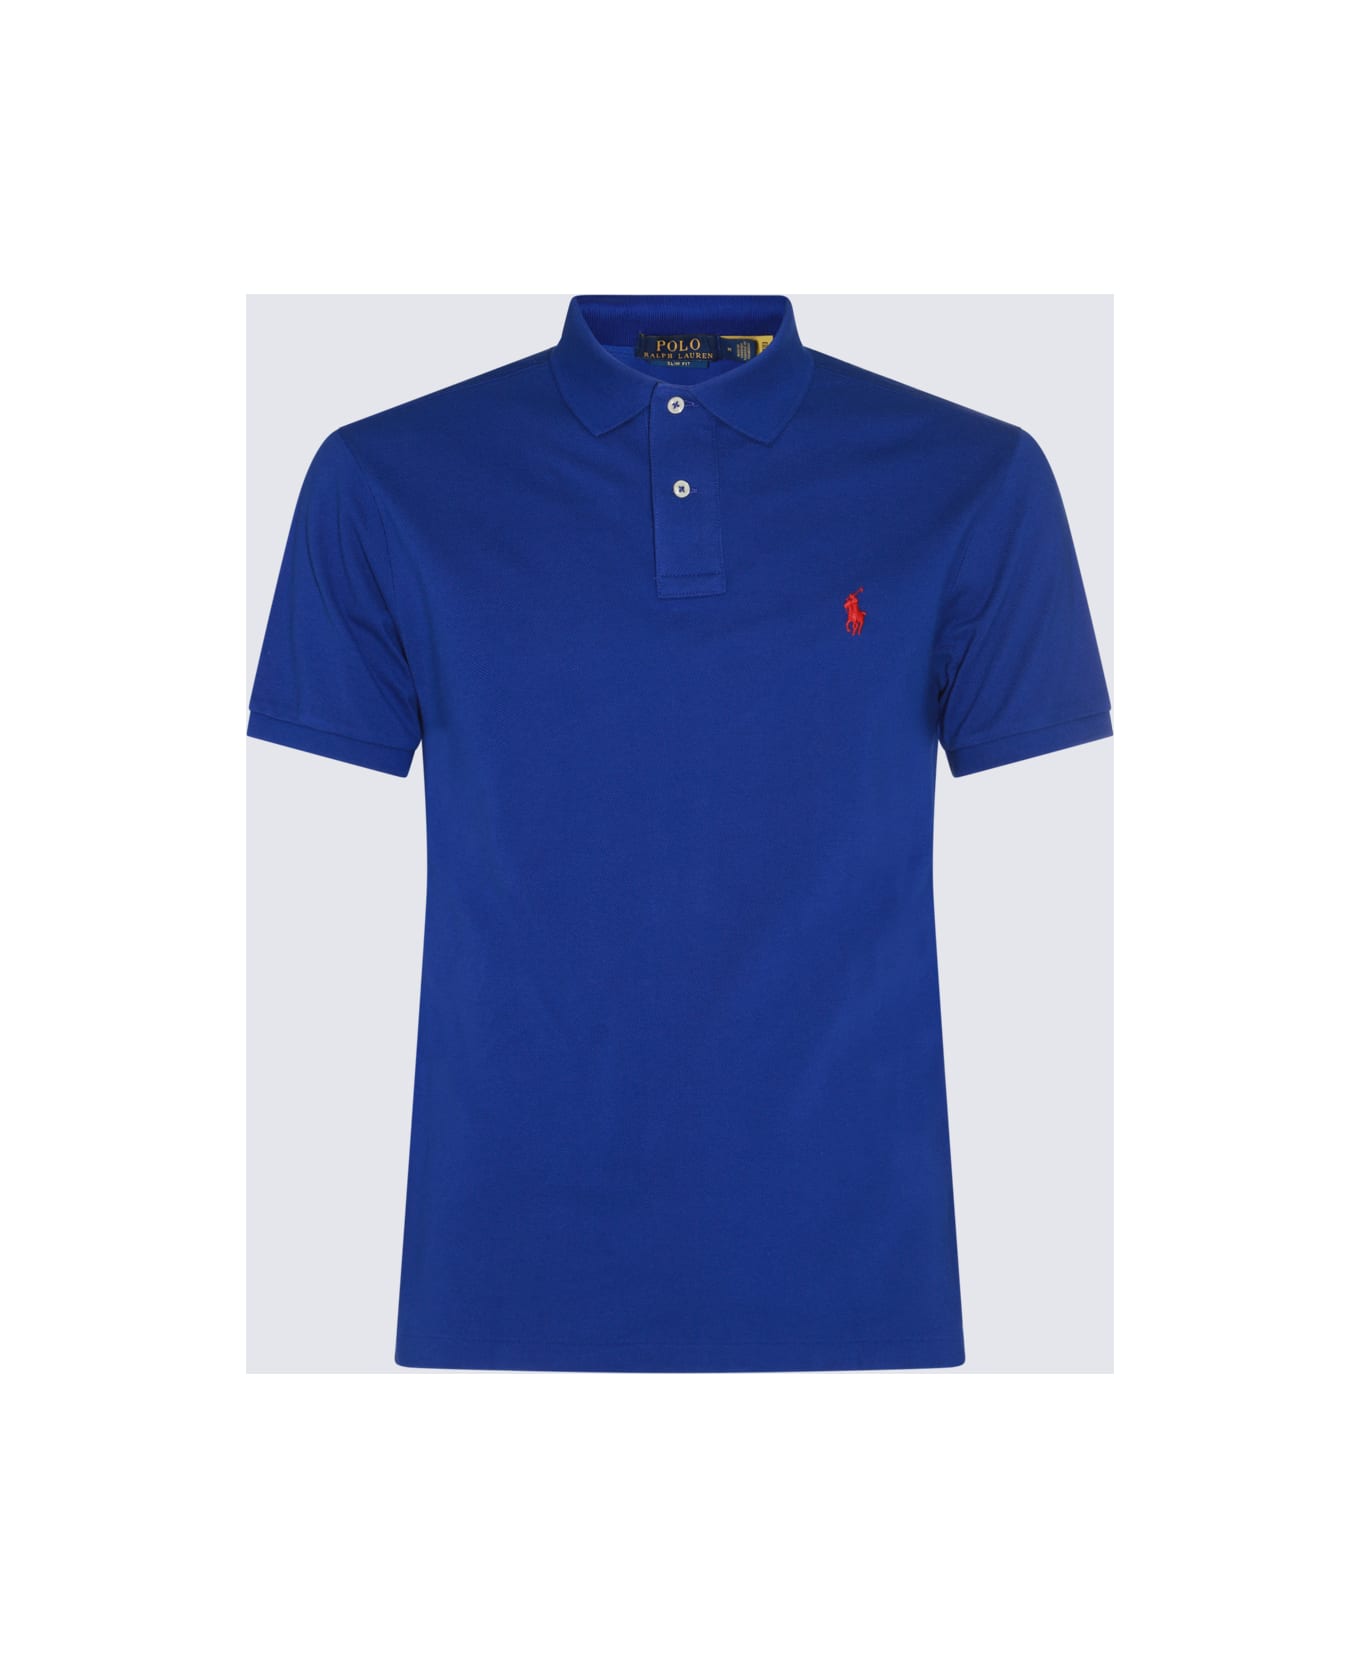 Polo Ralph Lauren Blue Cotton Polos Shirt - HERITAGE ROYAL ポロシャツ